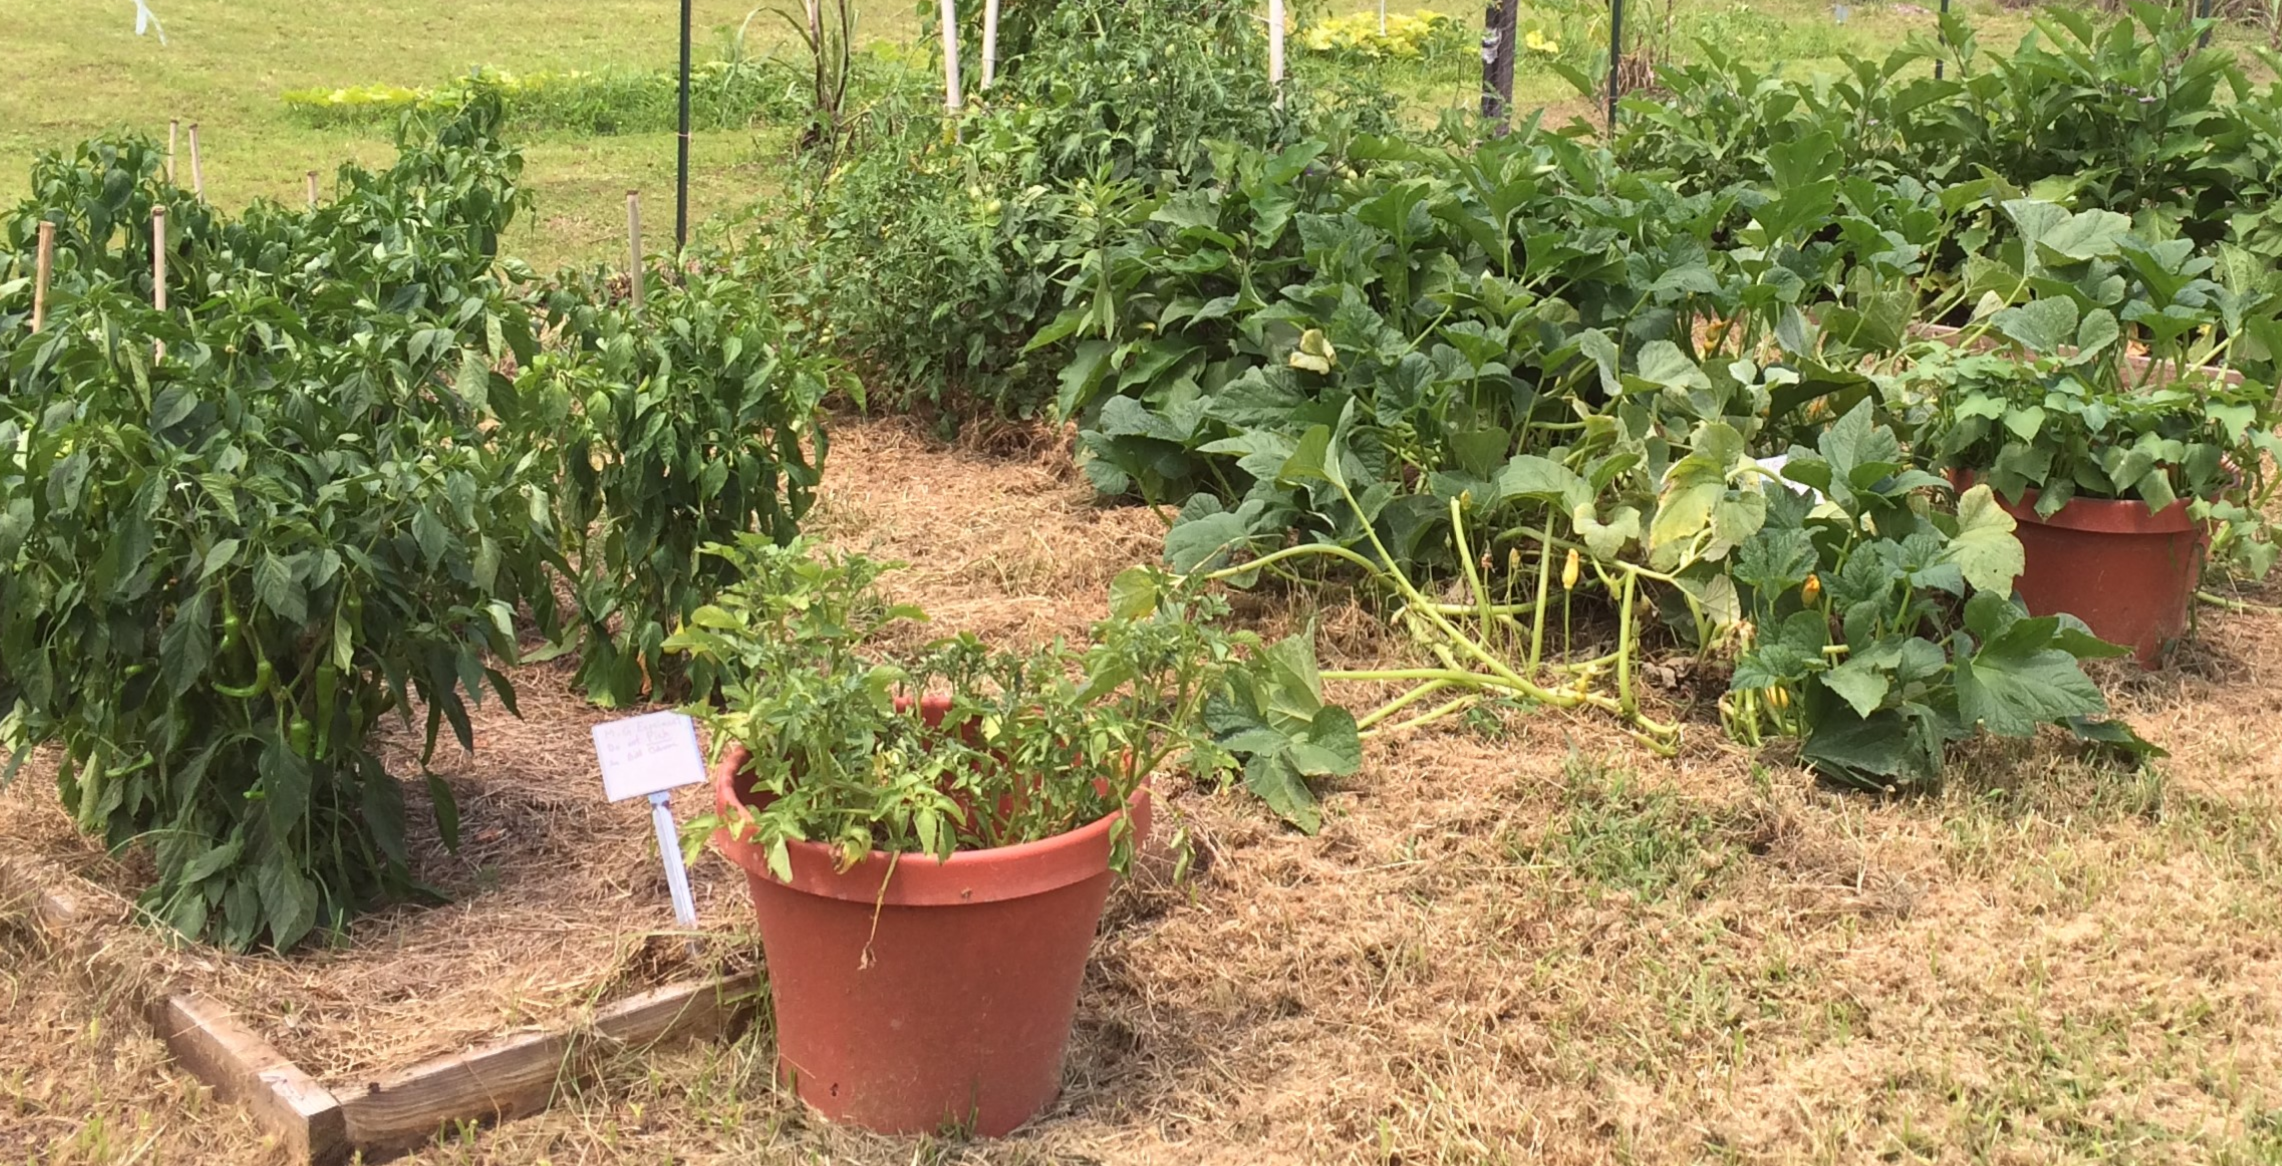 Panhandle Vegetable Gardeners Seeking the “Organic” Option